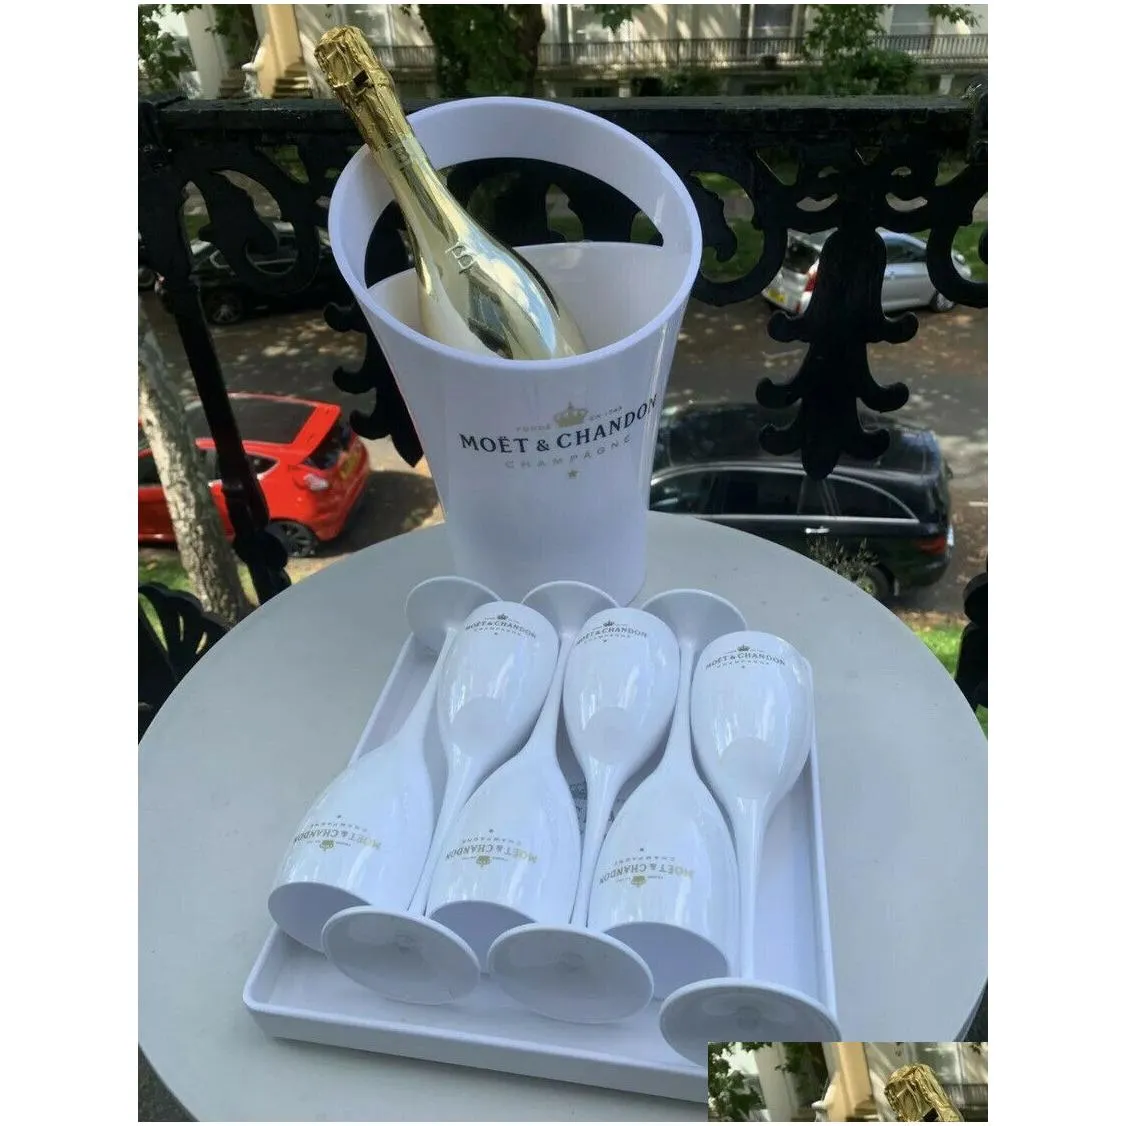 MOET & CHANDON ICE BUCKET CHAMPAGNE FLUTE SET White Plastic Champagne Party Sets270C